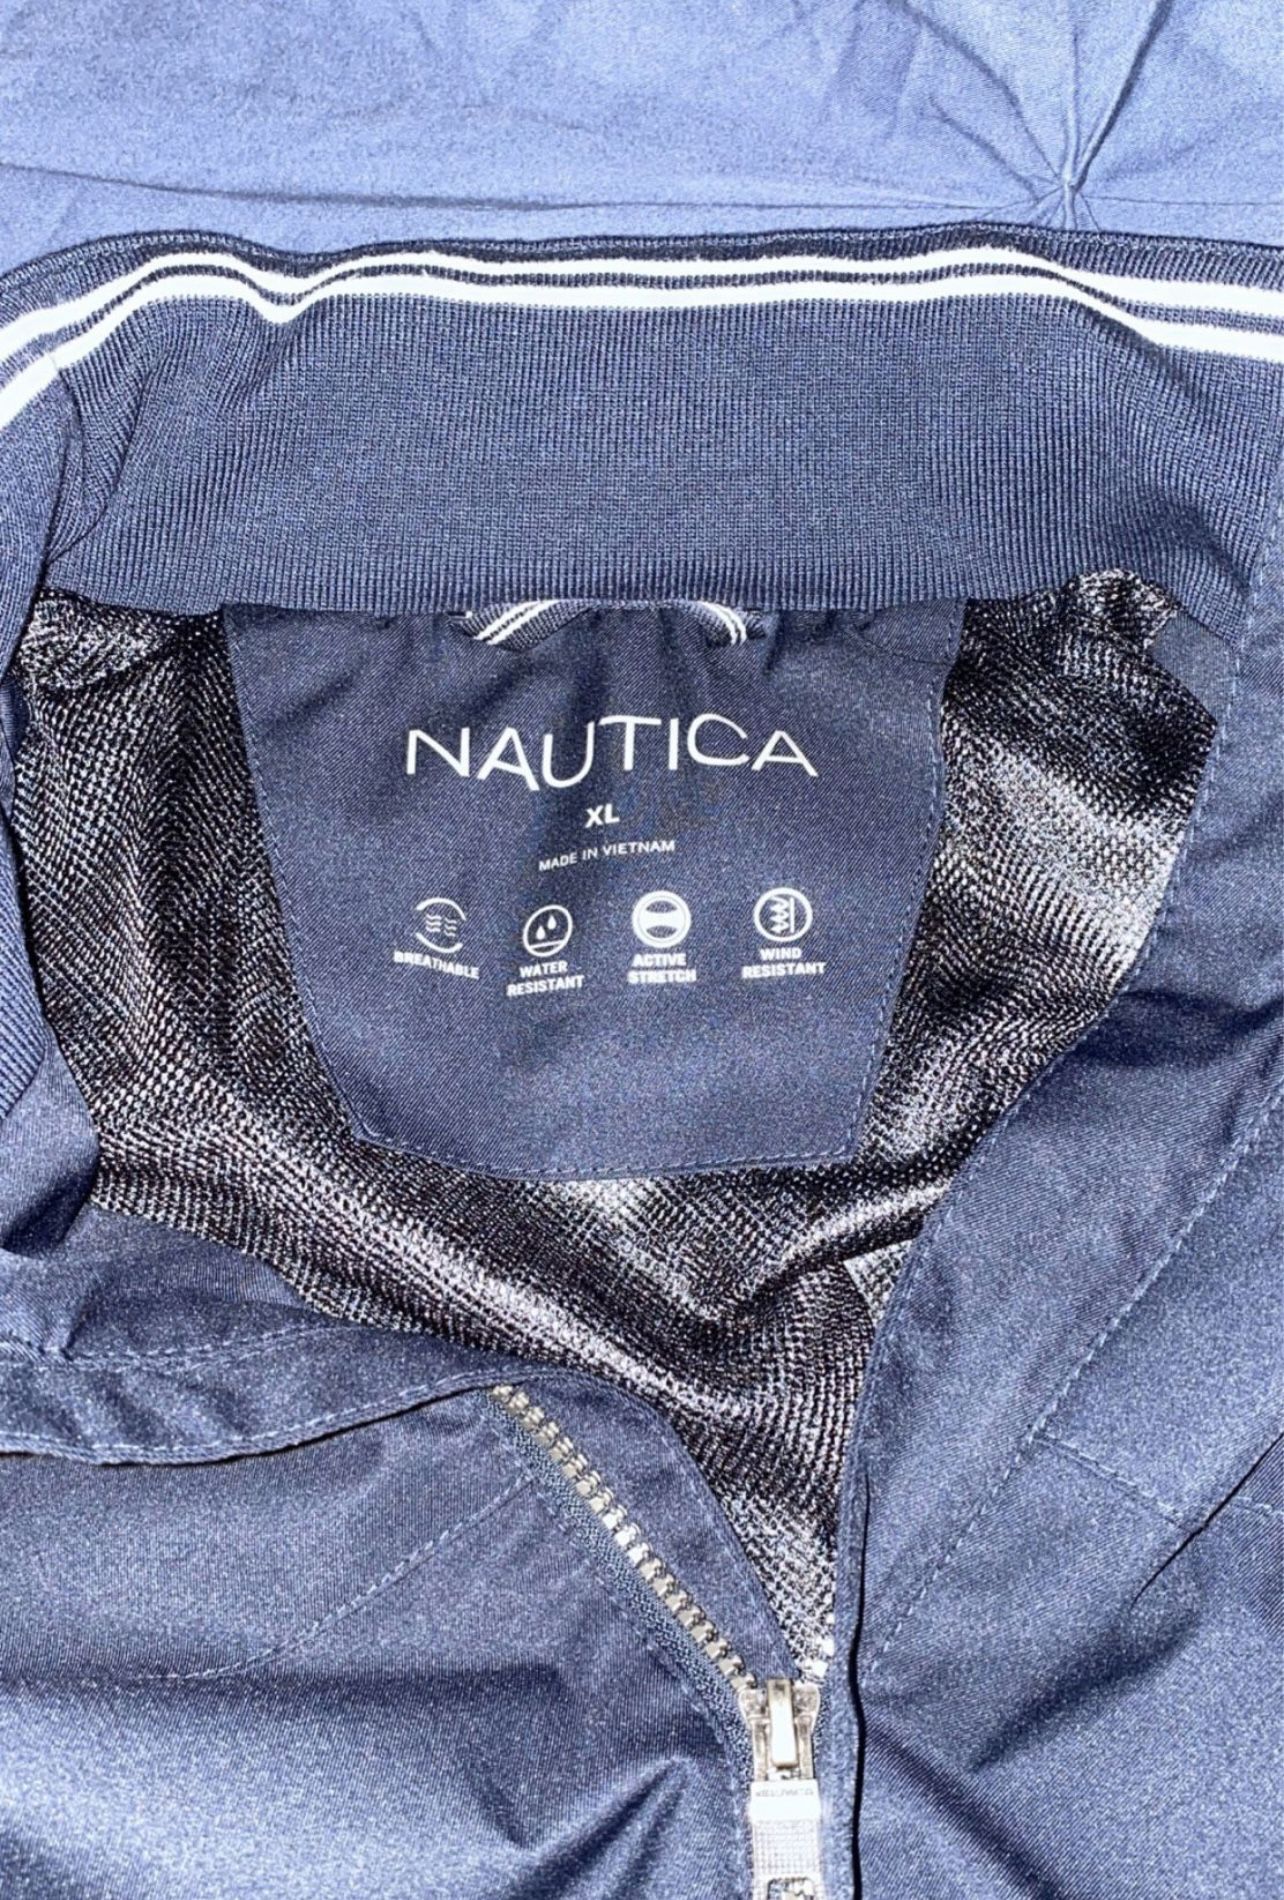 Nautica Men’s Waterproof Packable Hooded Jacket, XL.